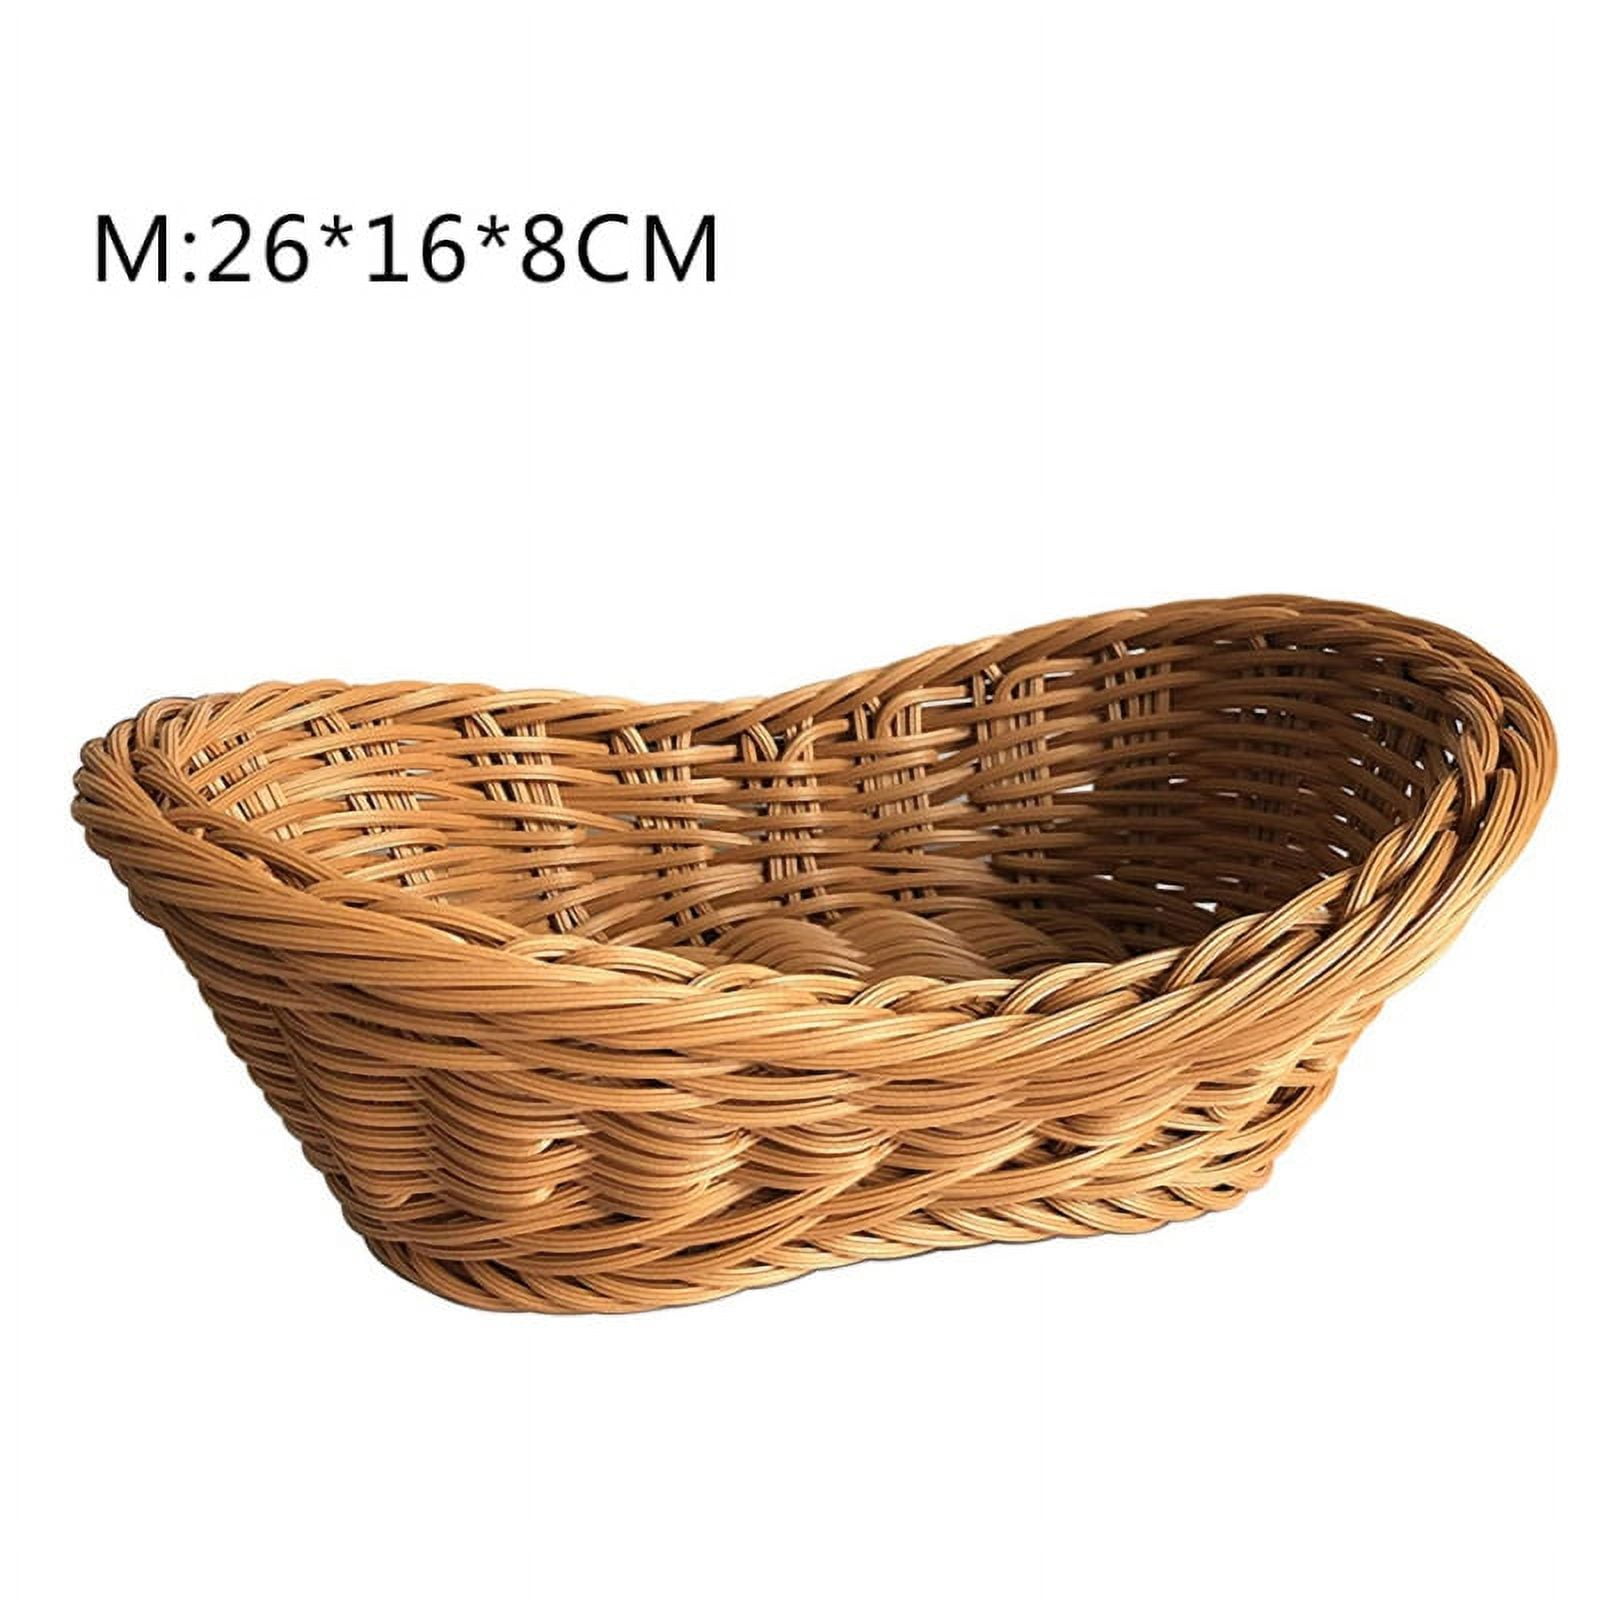 Sopsele Small Baskets for Organizing  Bathroom，DrawerBasket，TableBaskets，ToiletPaperBasket，Rectangular Small  Woven Basket With Liner for